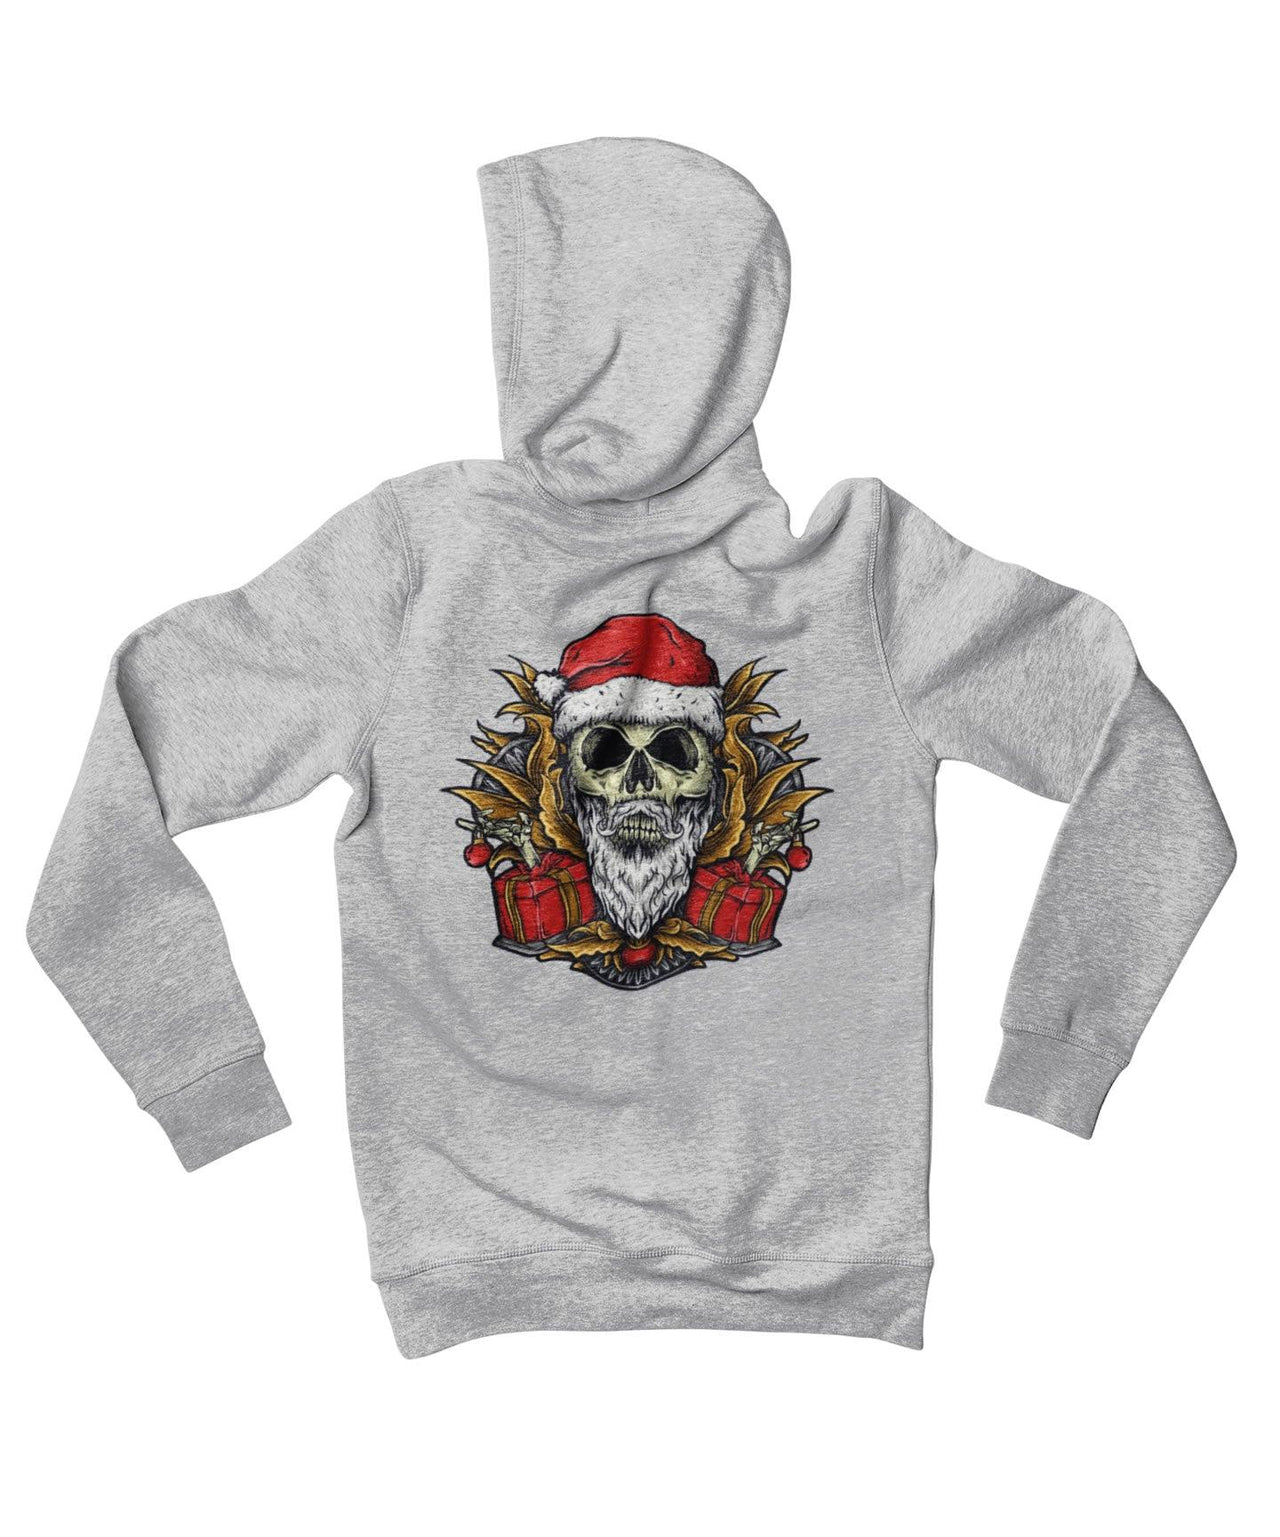 Skull Santa Back Printed Christmas Hoodie For Men and Women 8Ball